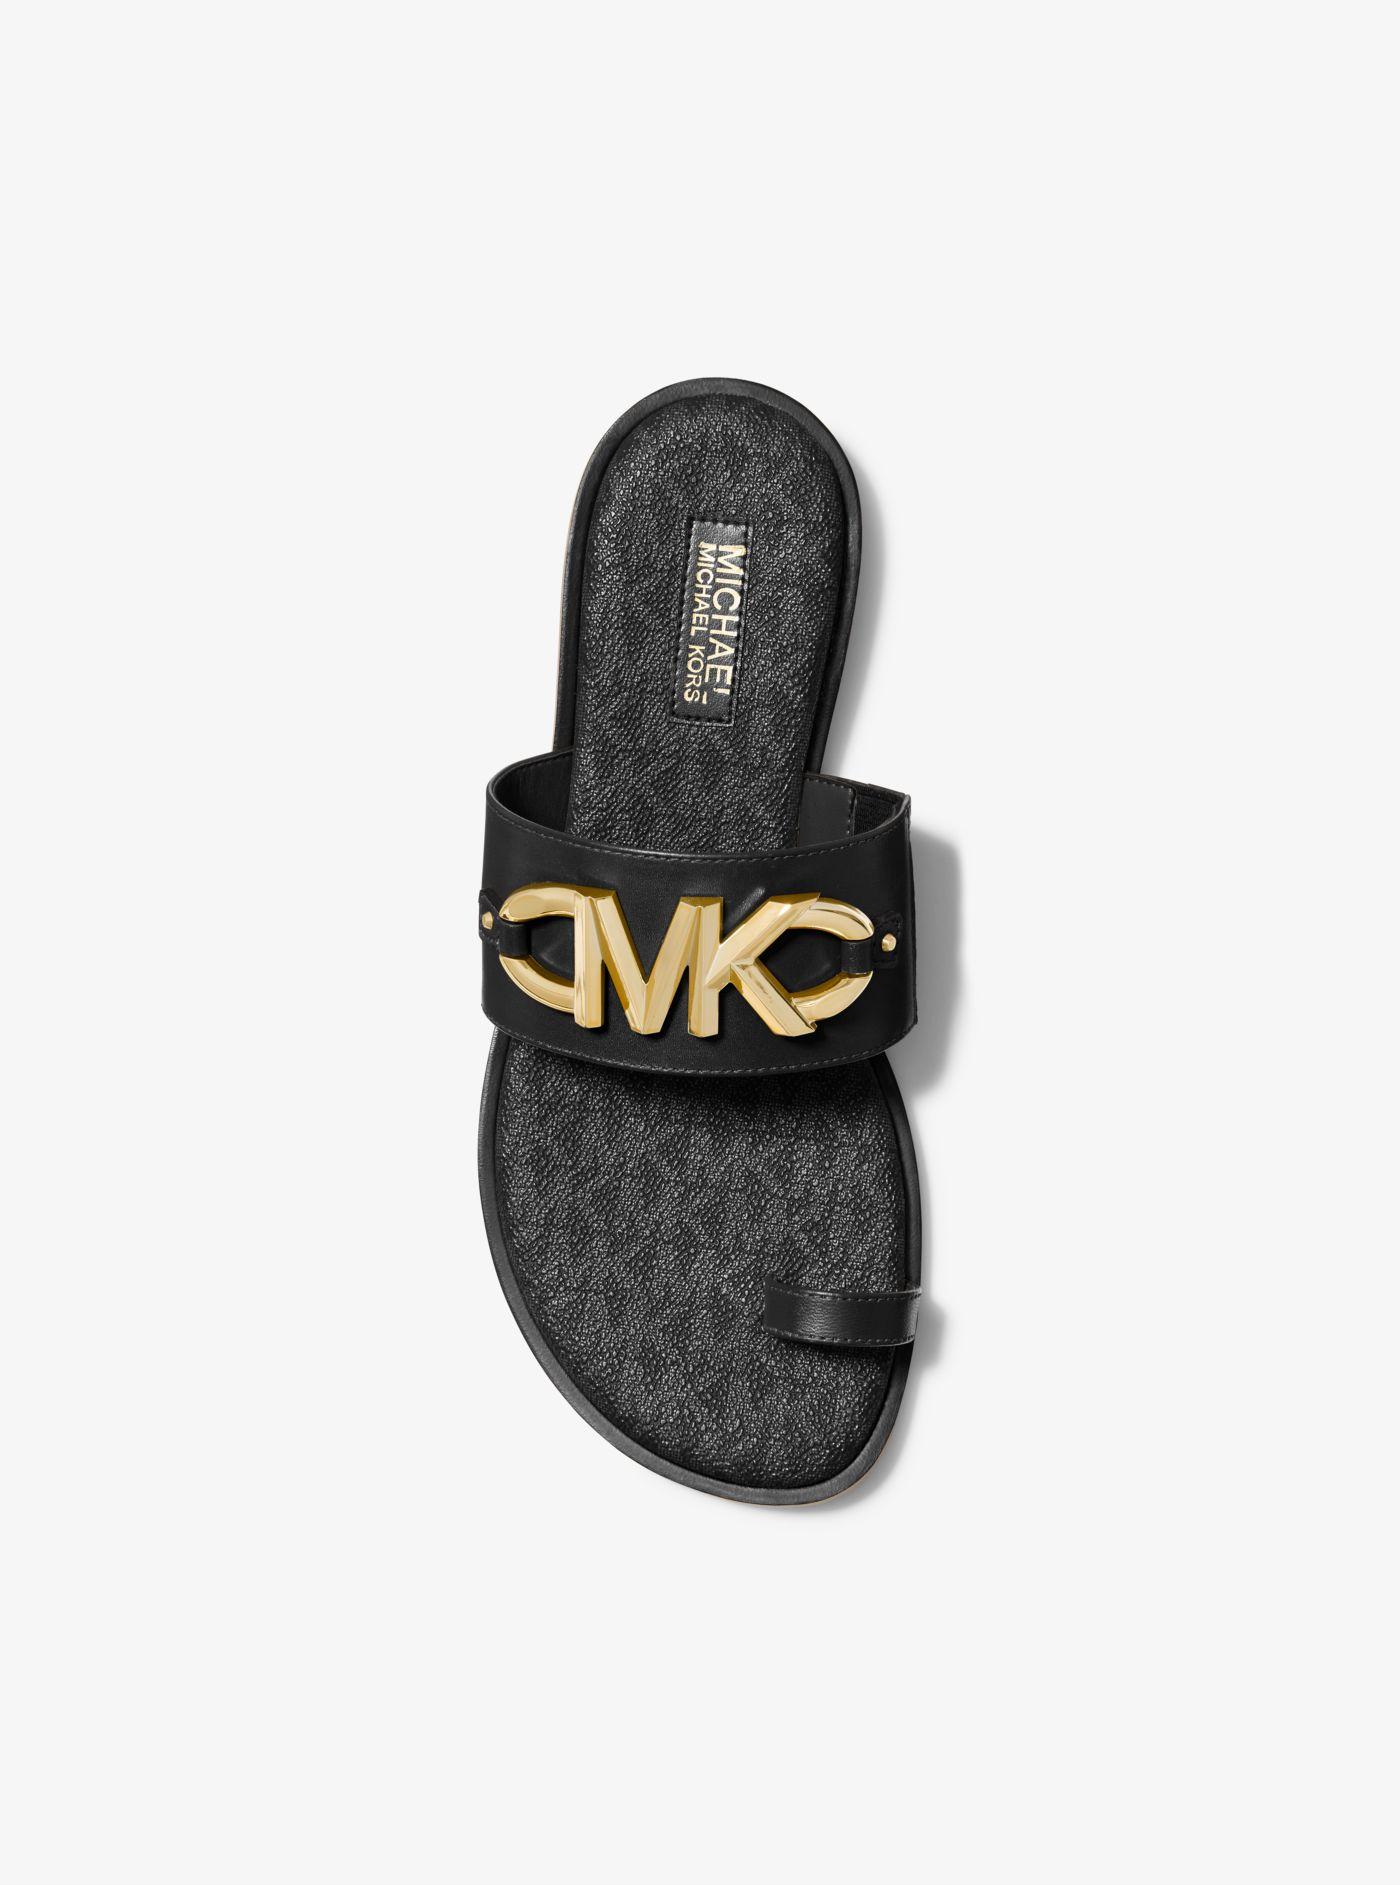 Michael Kors Izzy Embellished Leather Sandal in Black | Lyst